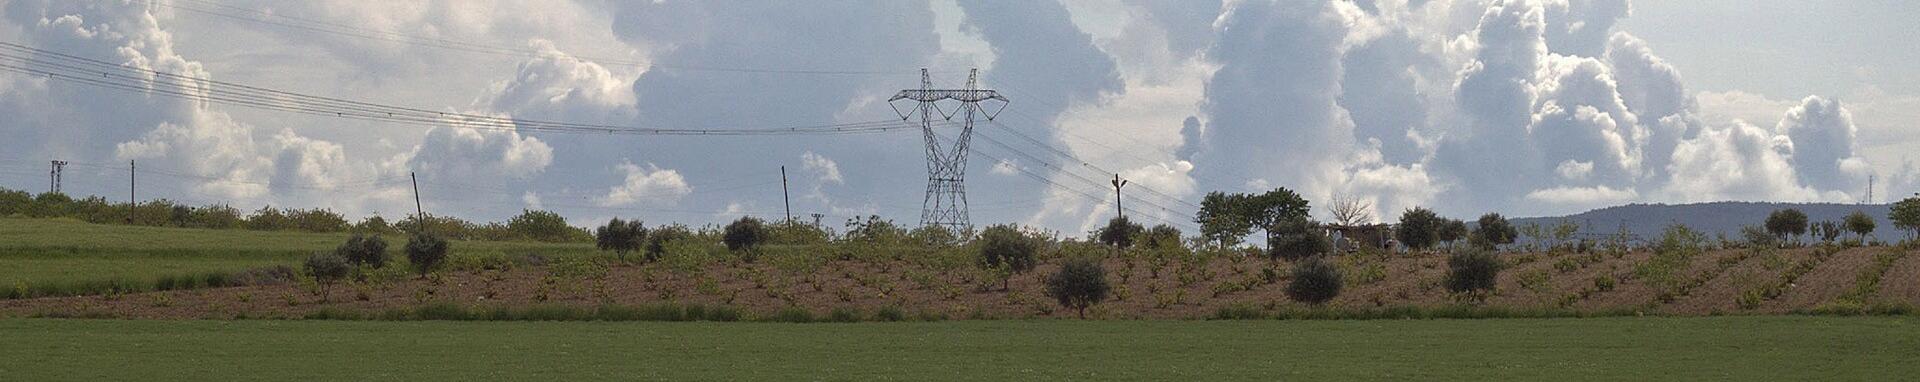 World Bank Photo Collection Power lines stretch across rural Turkey.Photo: Yusuf Türker/ World Bank